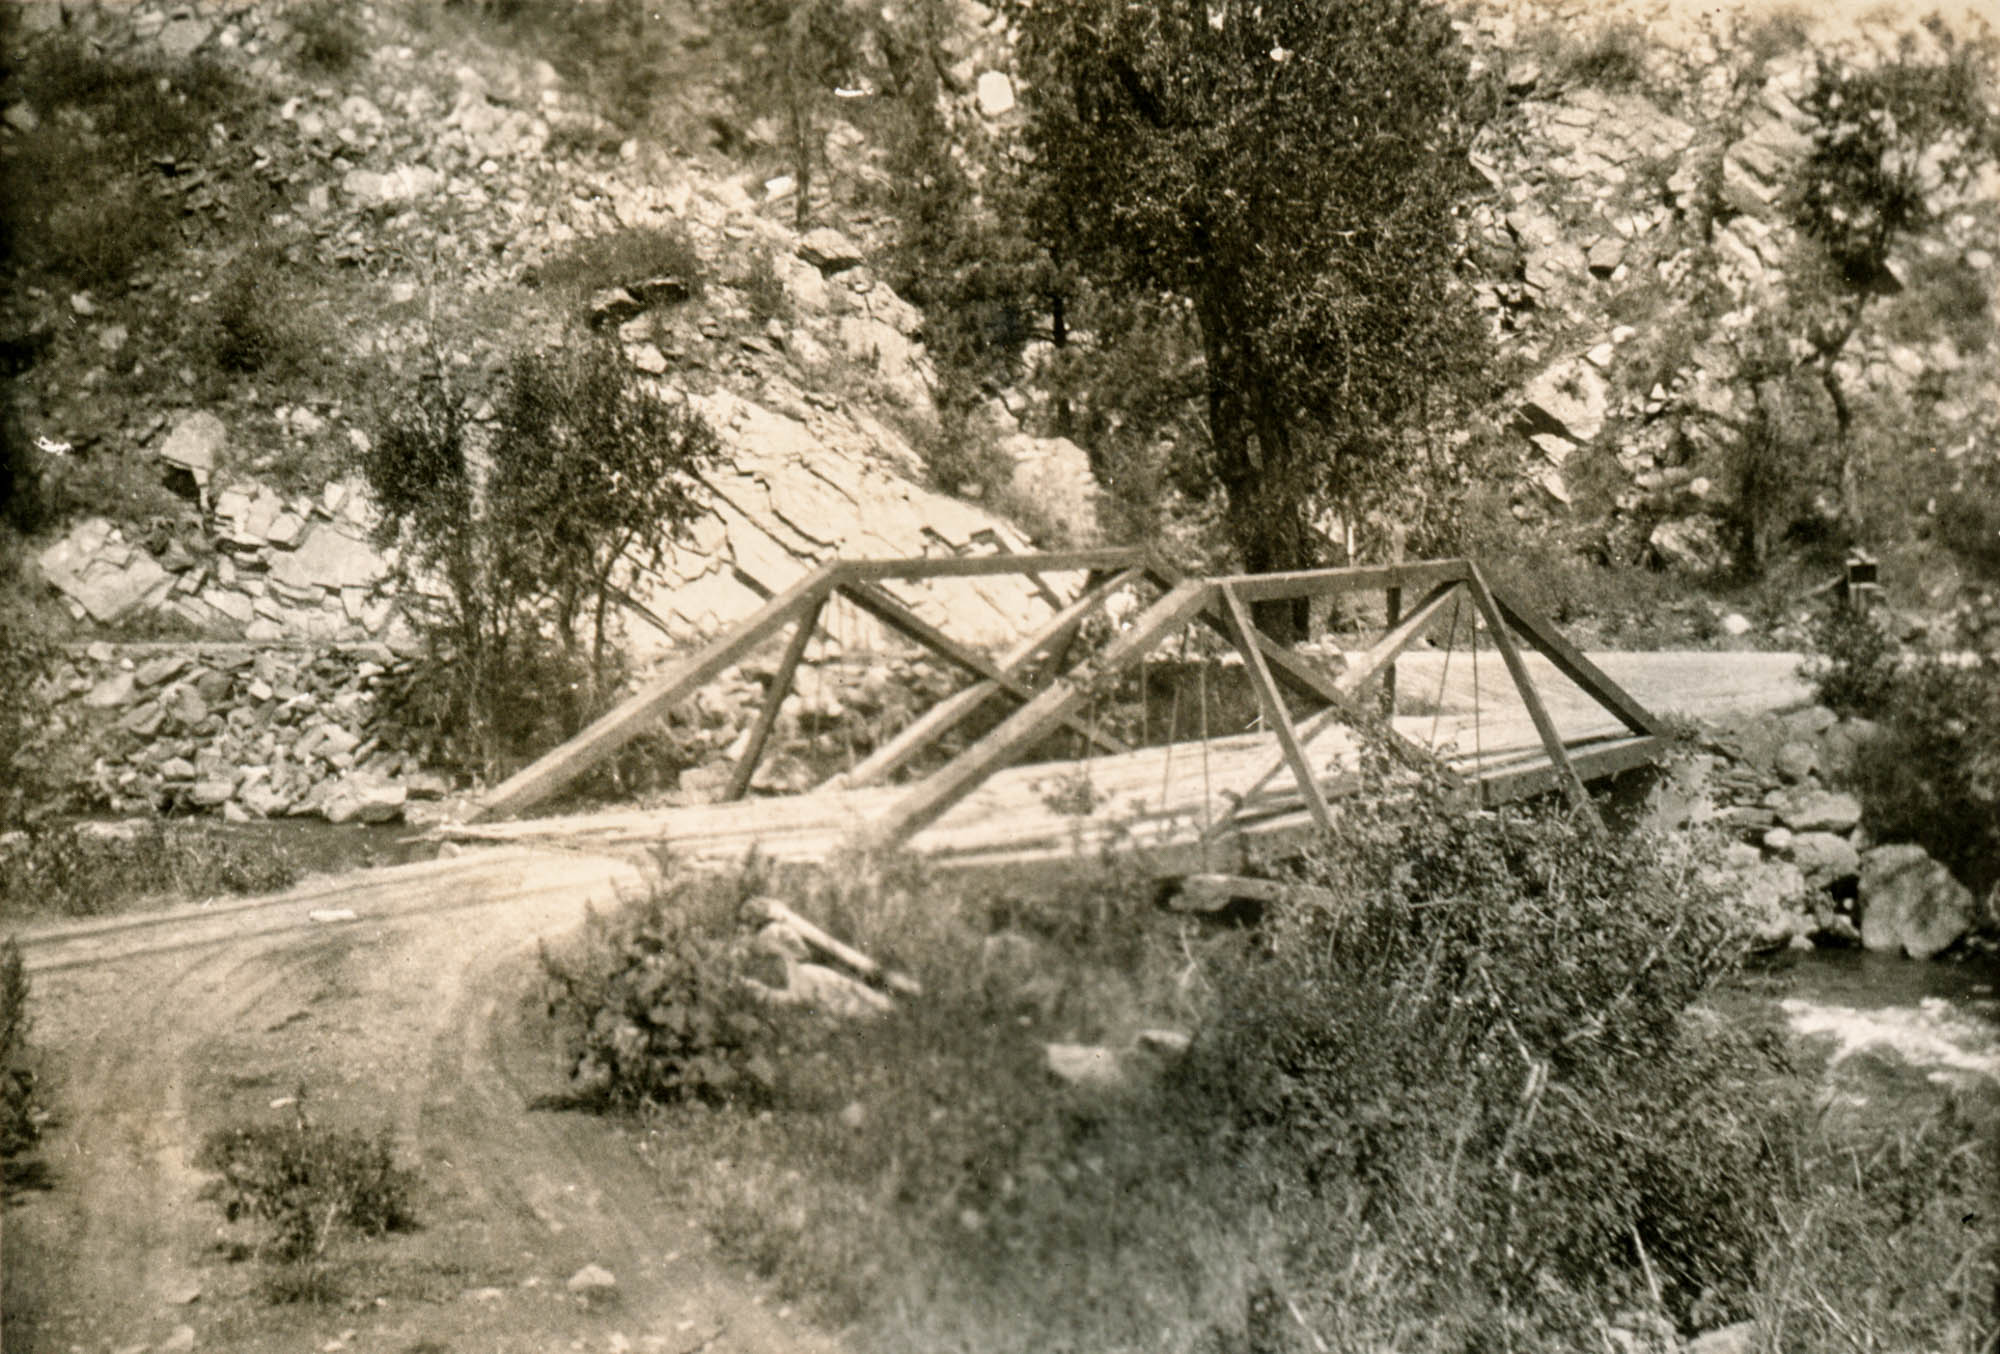 Idlewild Lodge - idlewildlodge.github.io - Circa 1920 - Idlewild Bridge